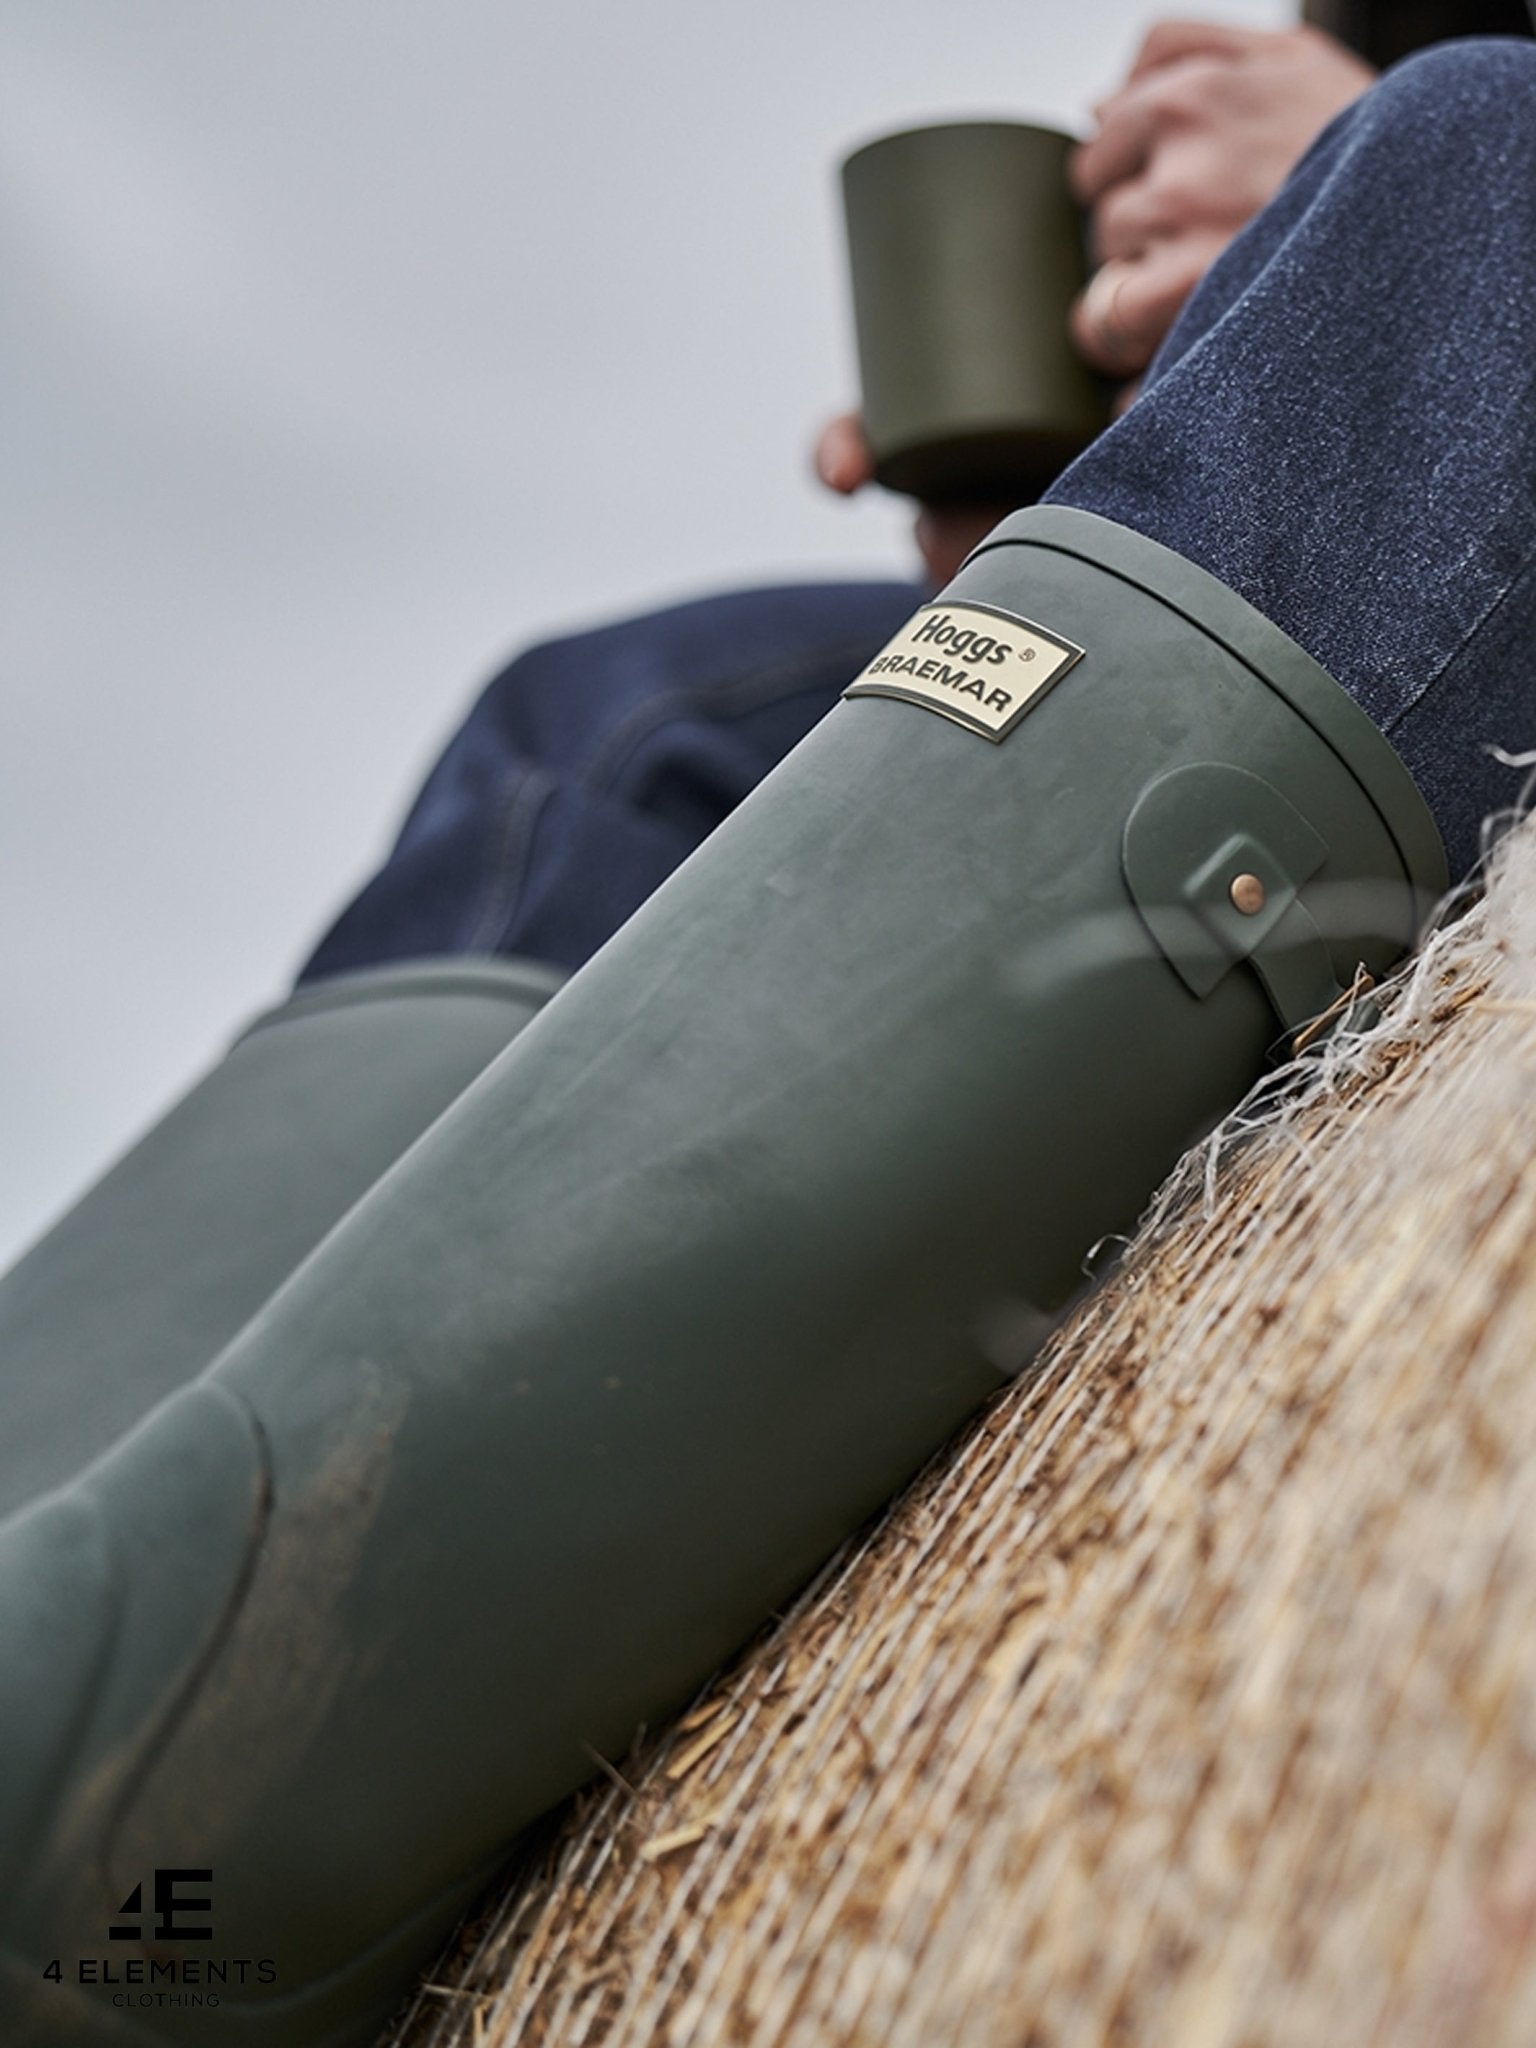 Hoggs of Fife Hoggs Of Fife - Braemar Wellington / welly boots waterproof Rubber outdoor rain boot Wellington Boots